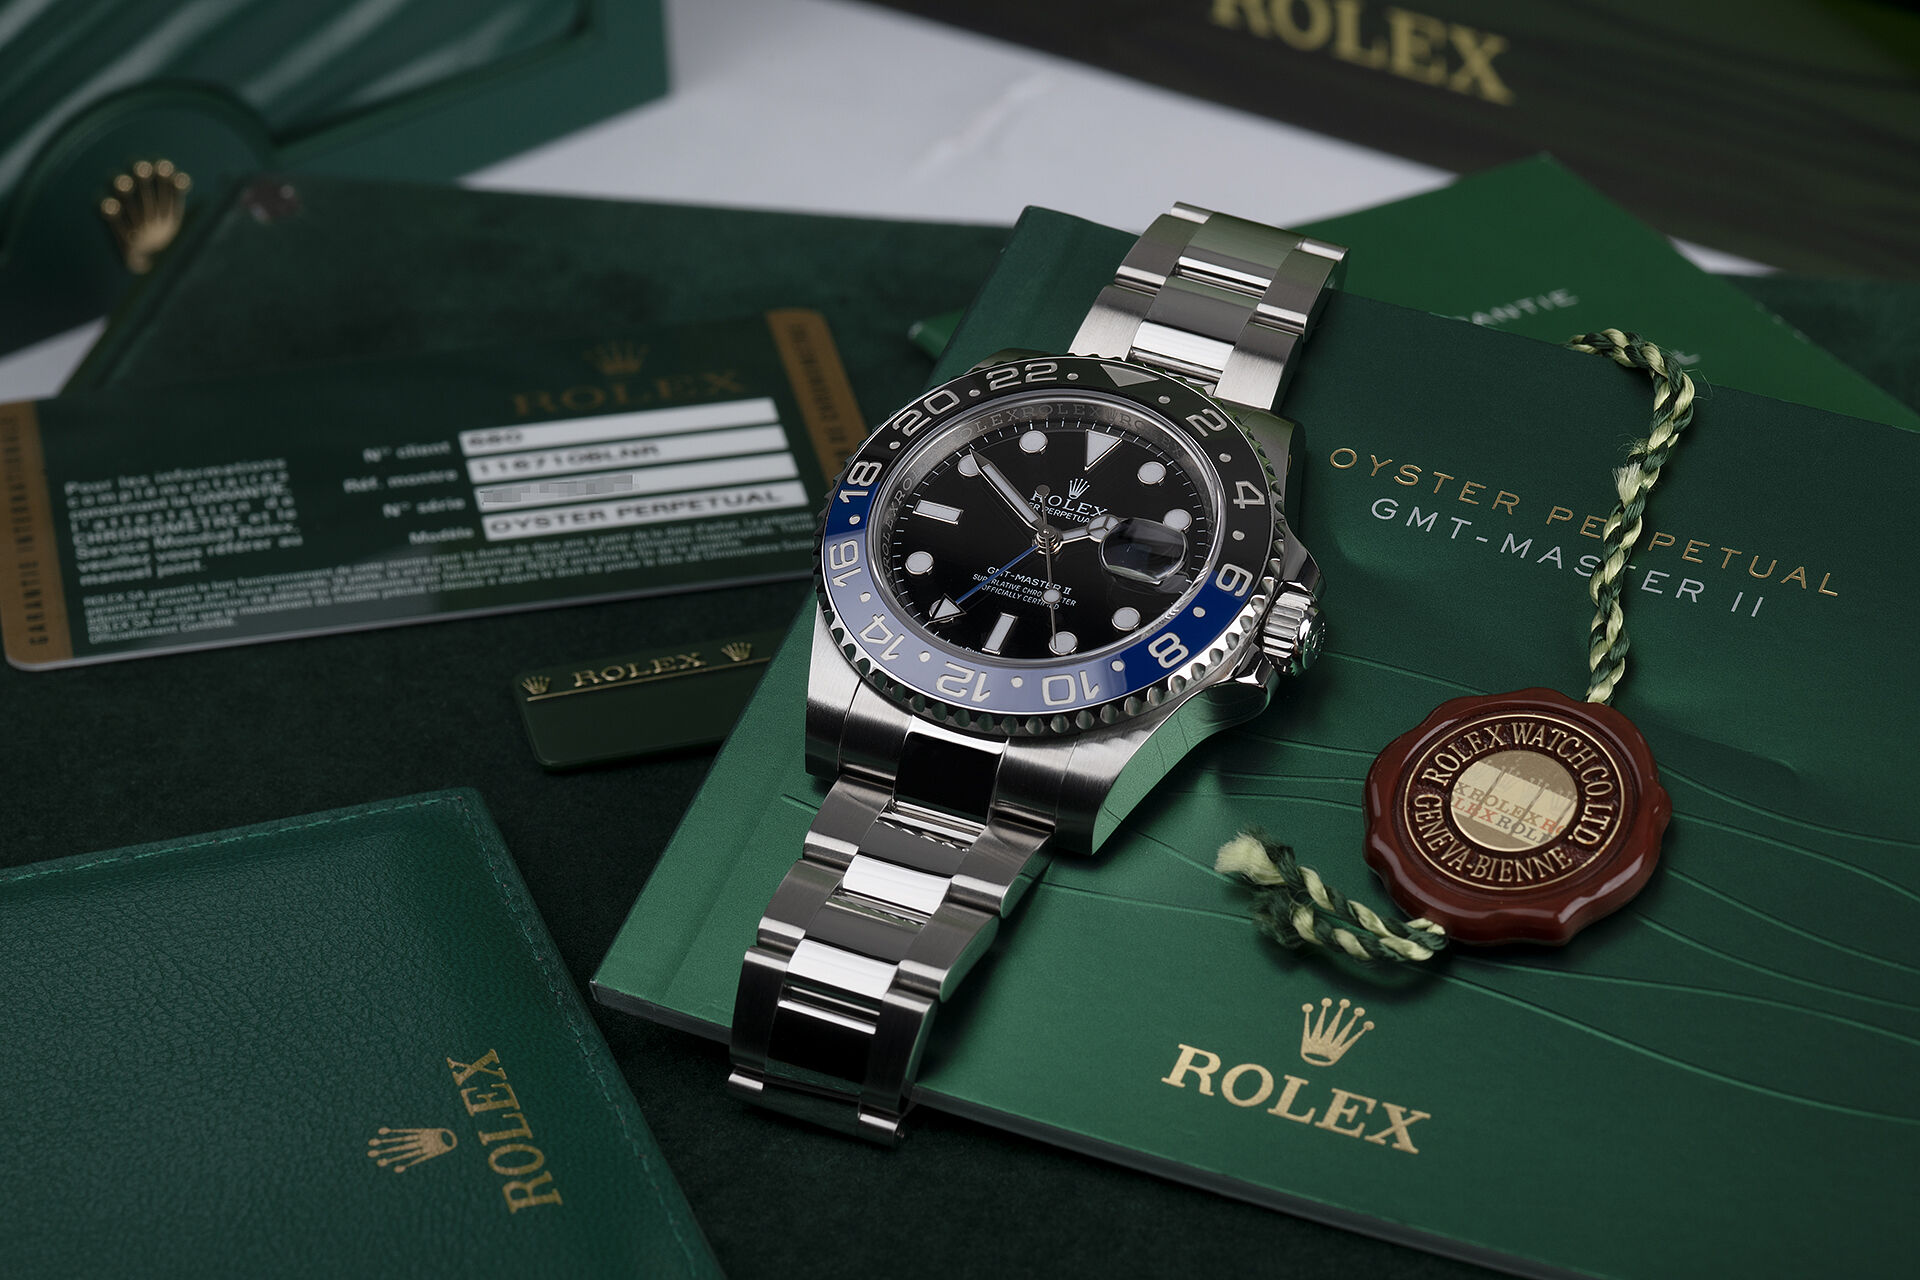 ref 116710BLNR | Box & Certificate | Rolex GMT-Master II